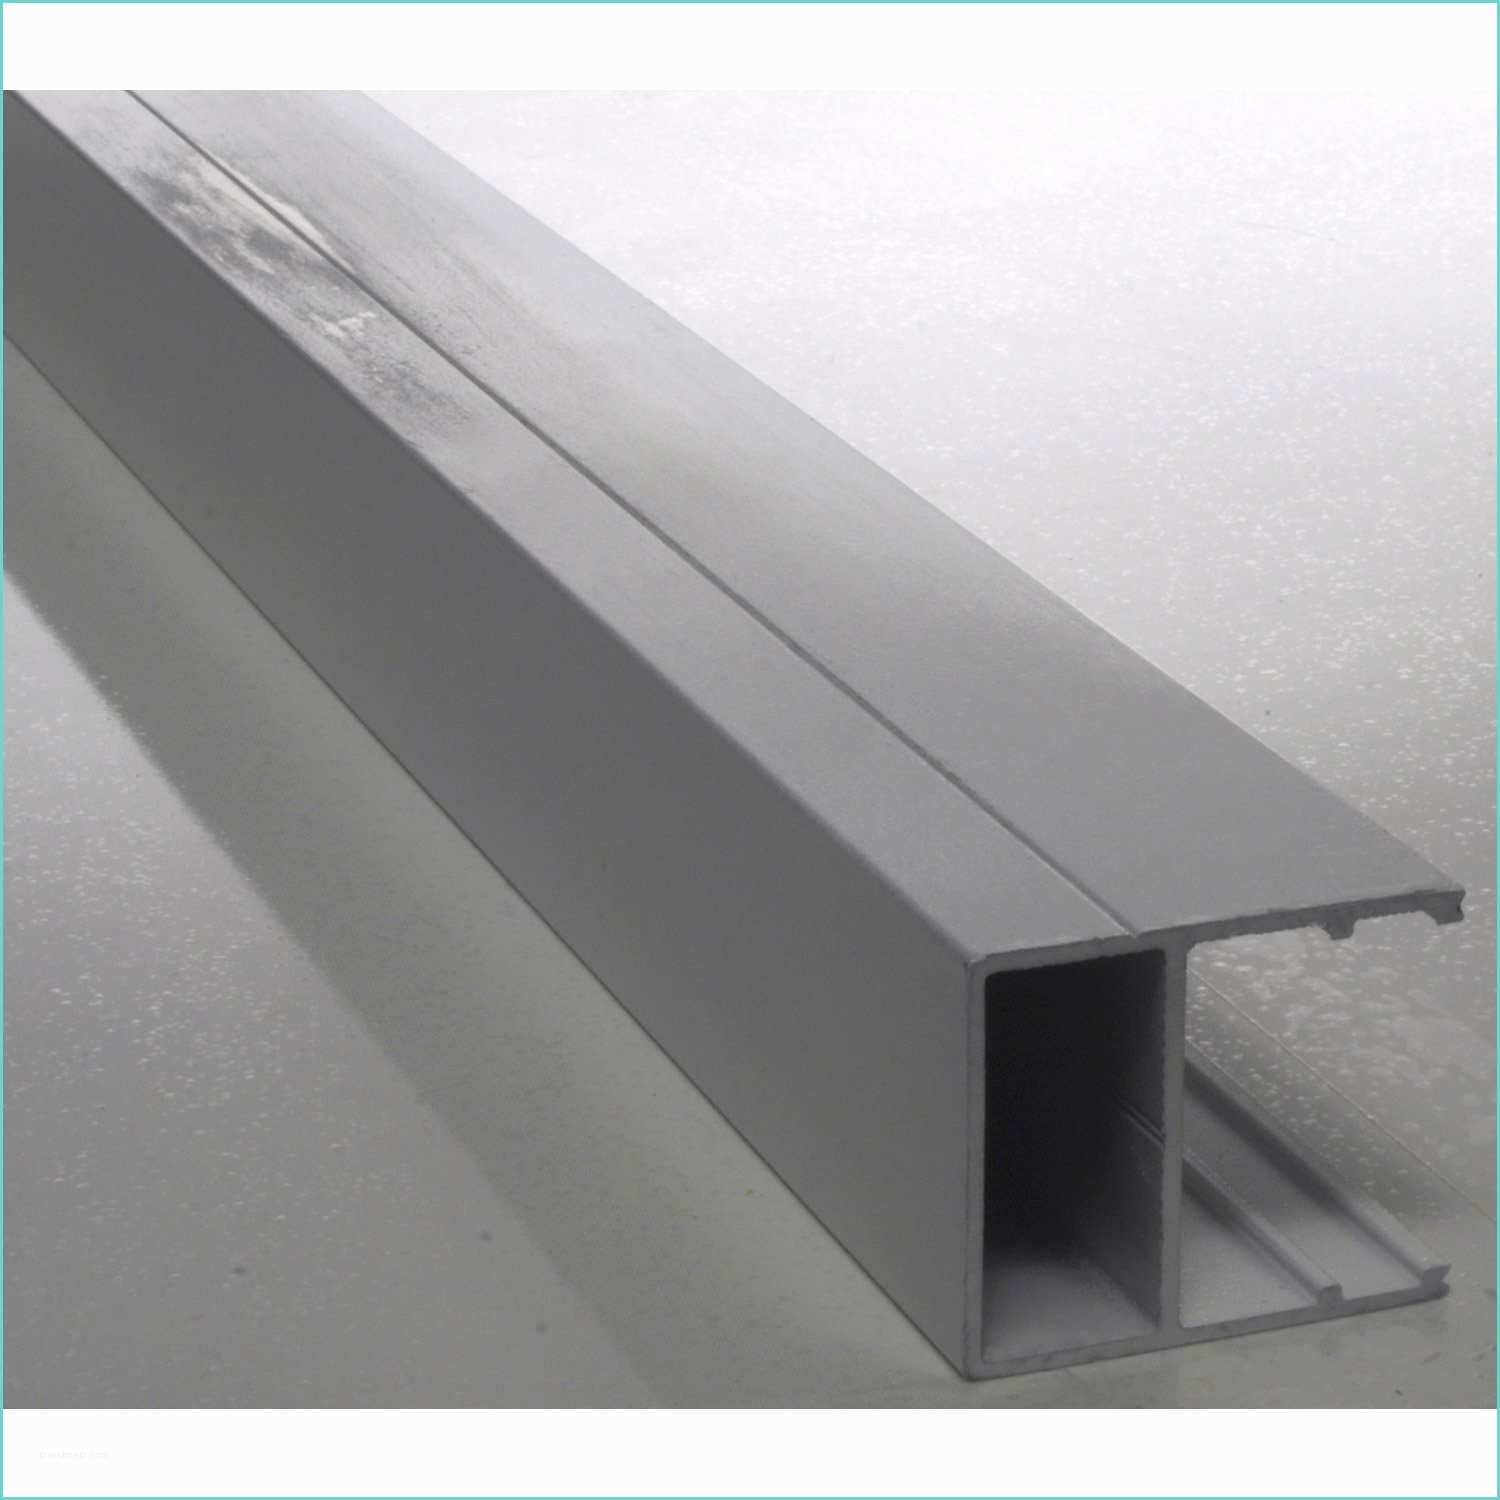 Profil Aluminium Pour Plaque Polycarbonate Profil Bordure Pour Plaque Ep 16 Mm Aluminium L 3 M